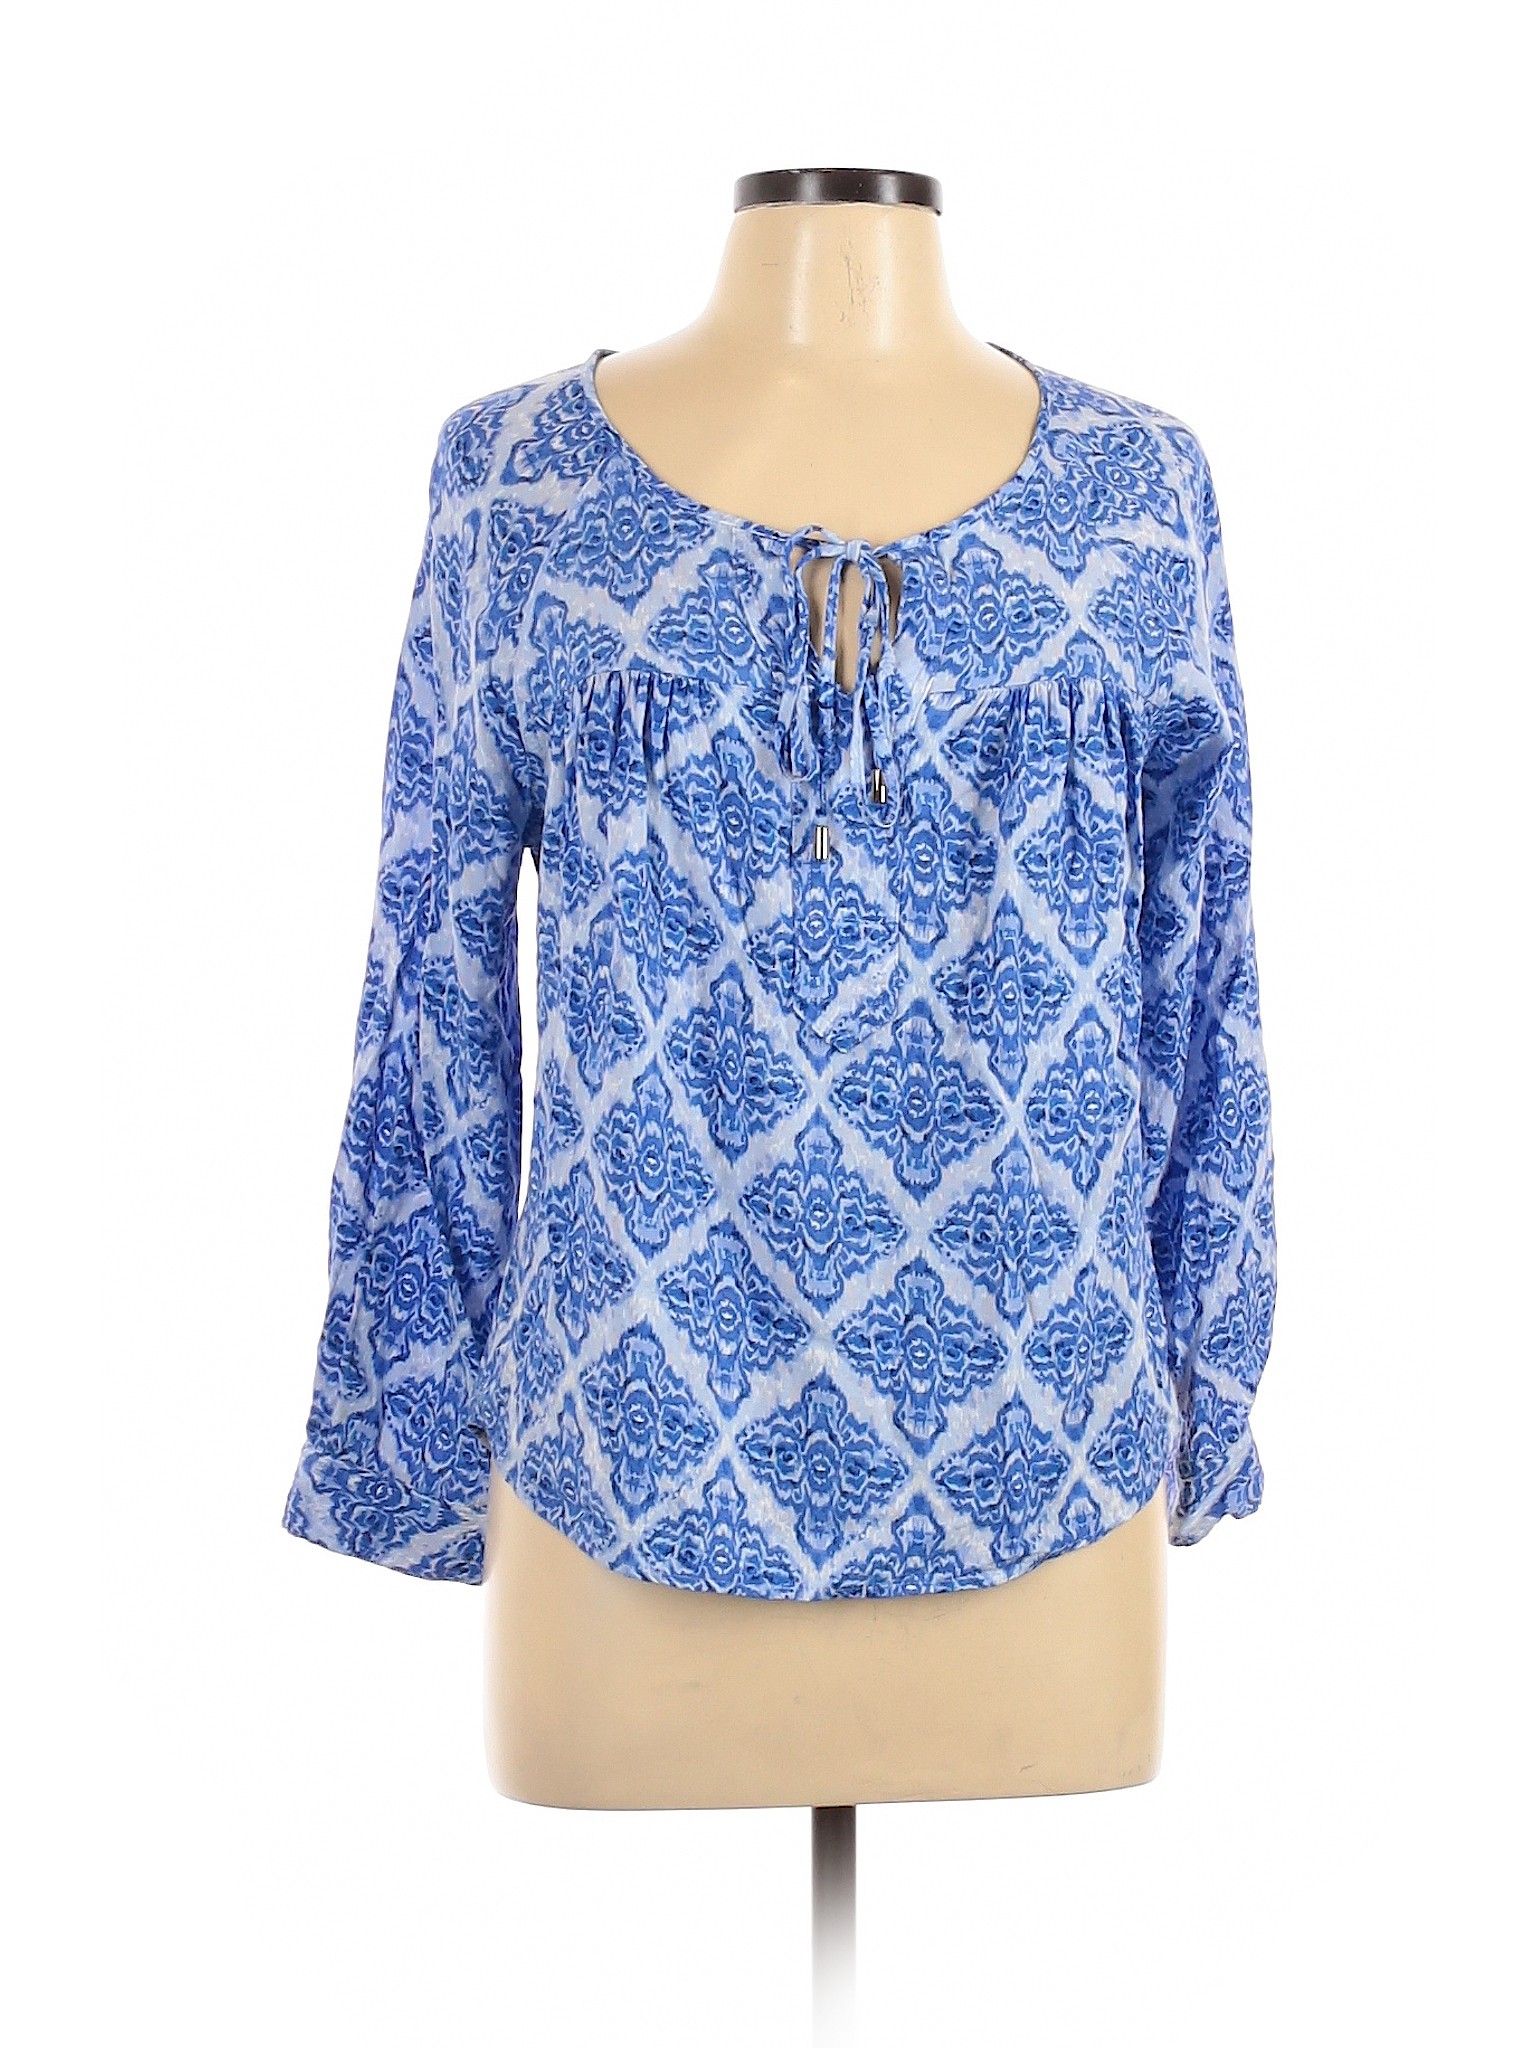 Cynthia Rowley TJX Women Blue Long Sleeve Blouse L | eBay